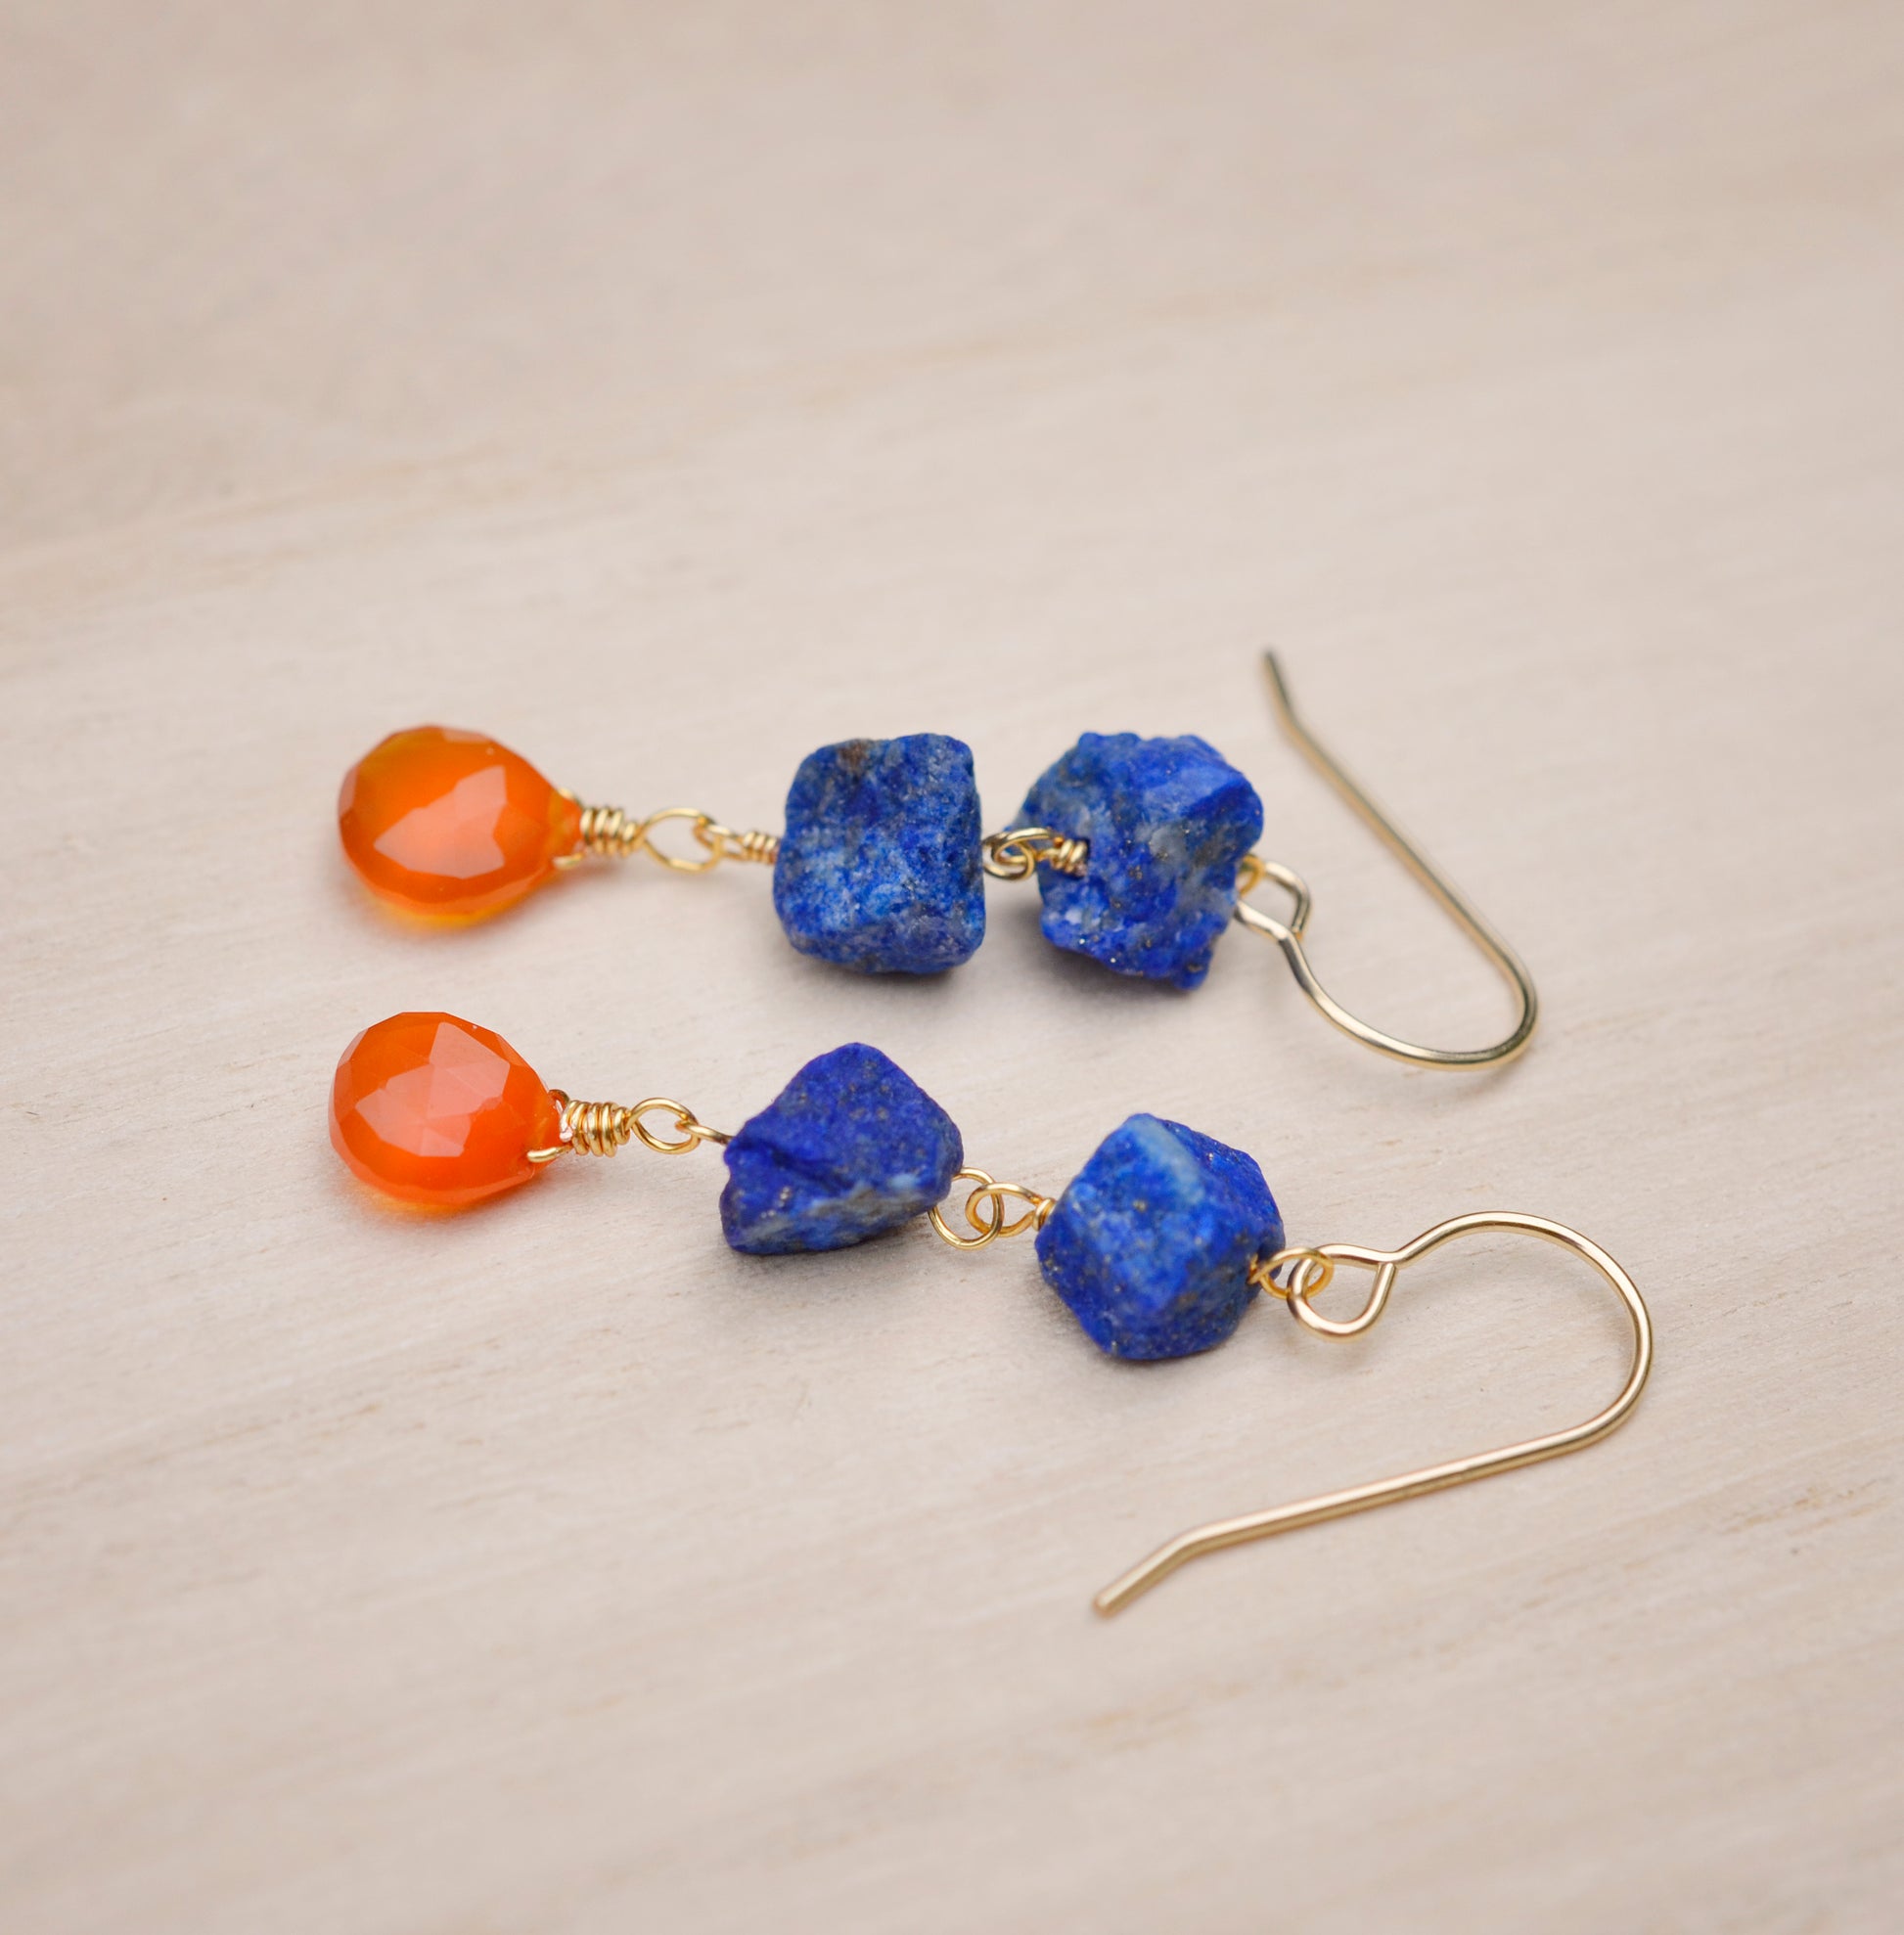 Lapis Lazuli and Carnelian Earrings, Raw Lapis Carnelian Dangles, Crystal Earrings, Sterling Silver or Gold Filled